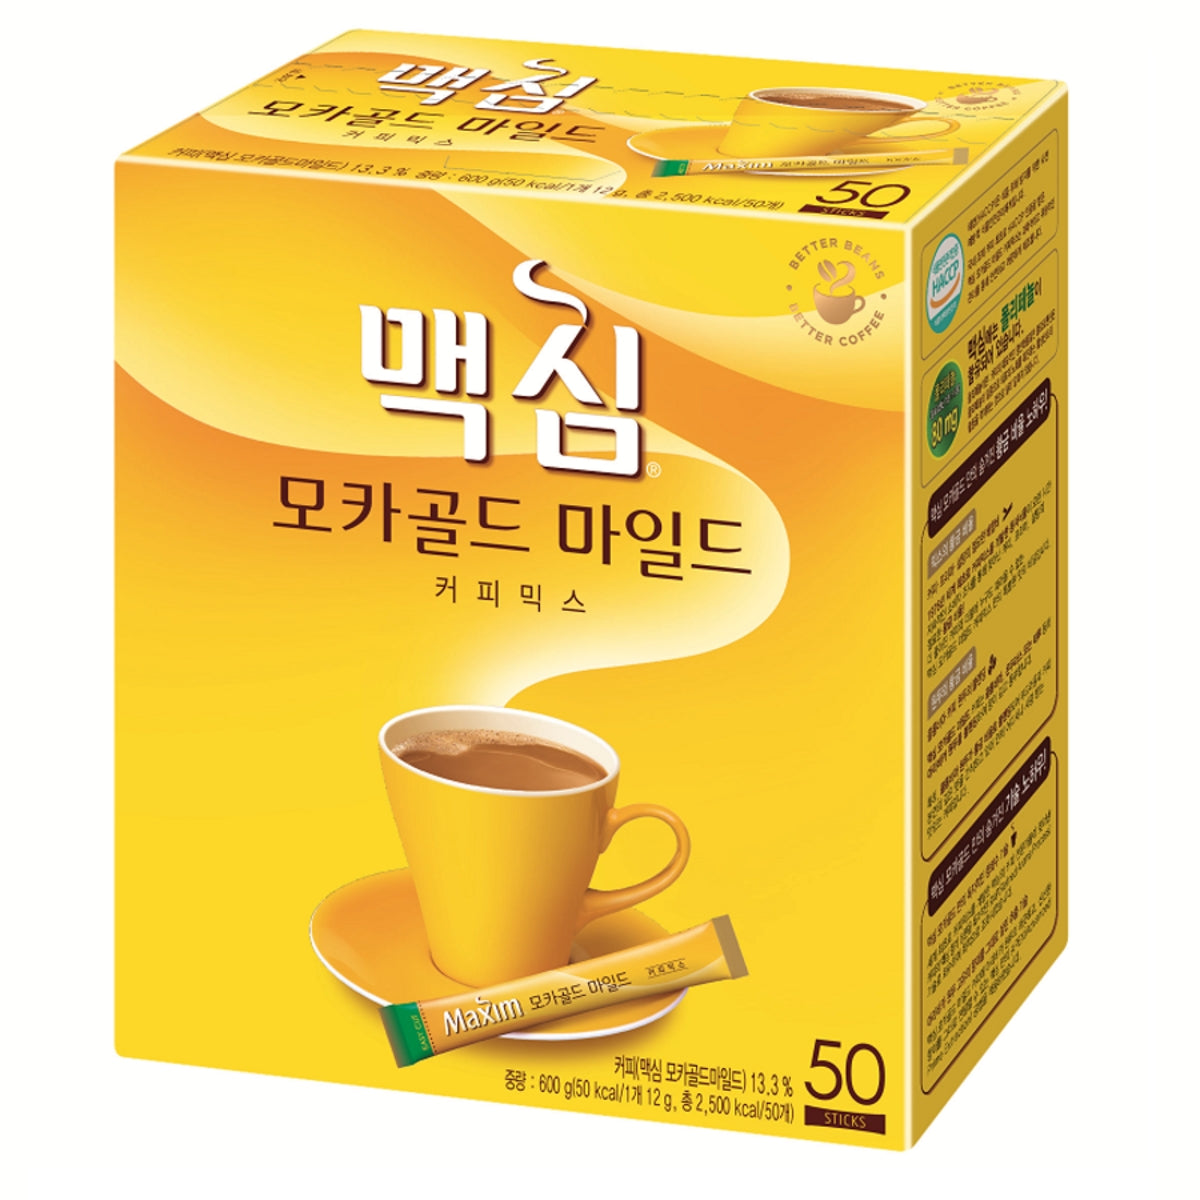 Dongsuh Maxim Mocha Gold Mild Coffee 12g x 50 sticks/ 동서 맥심 모카 골드 마일드 12gx50개입